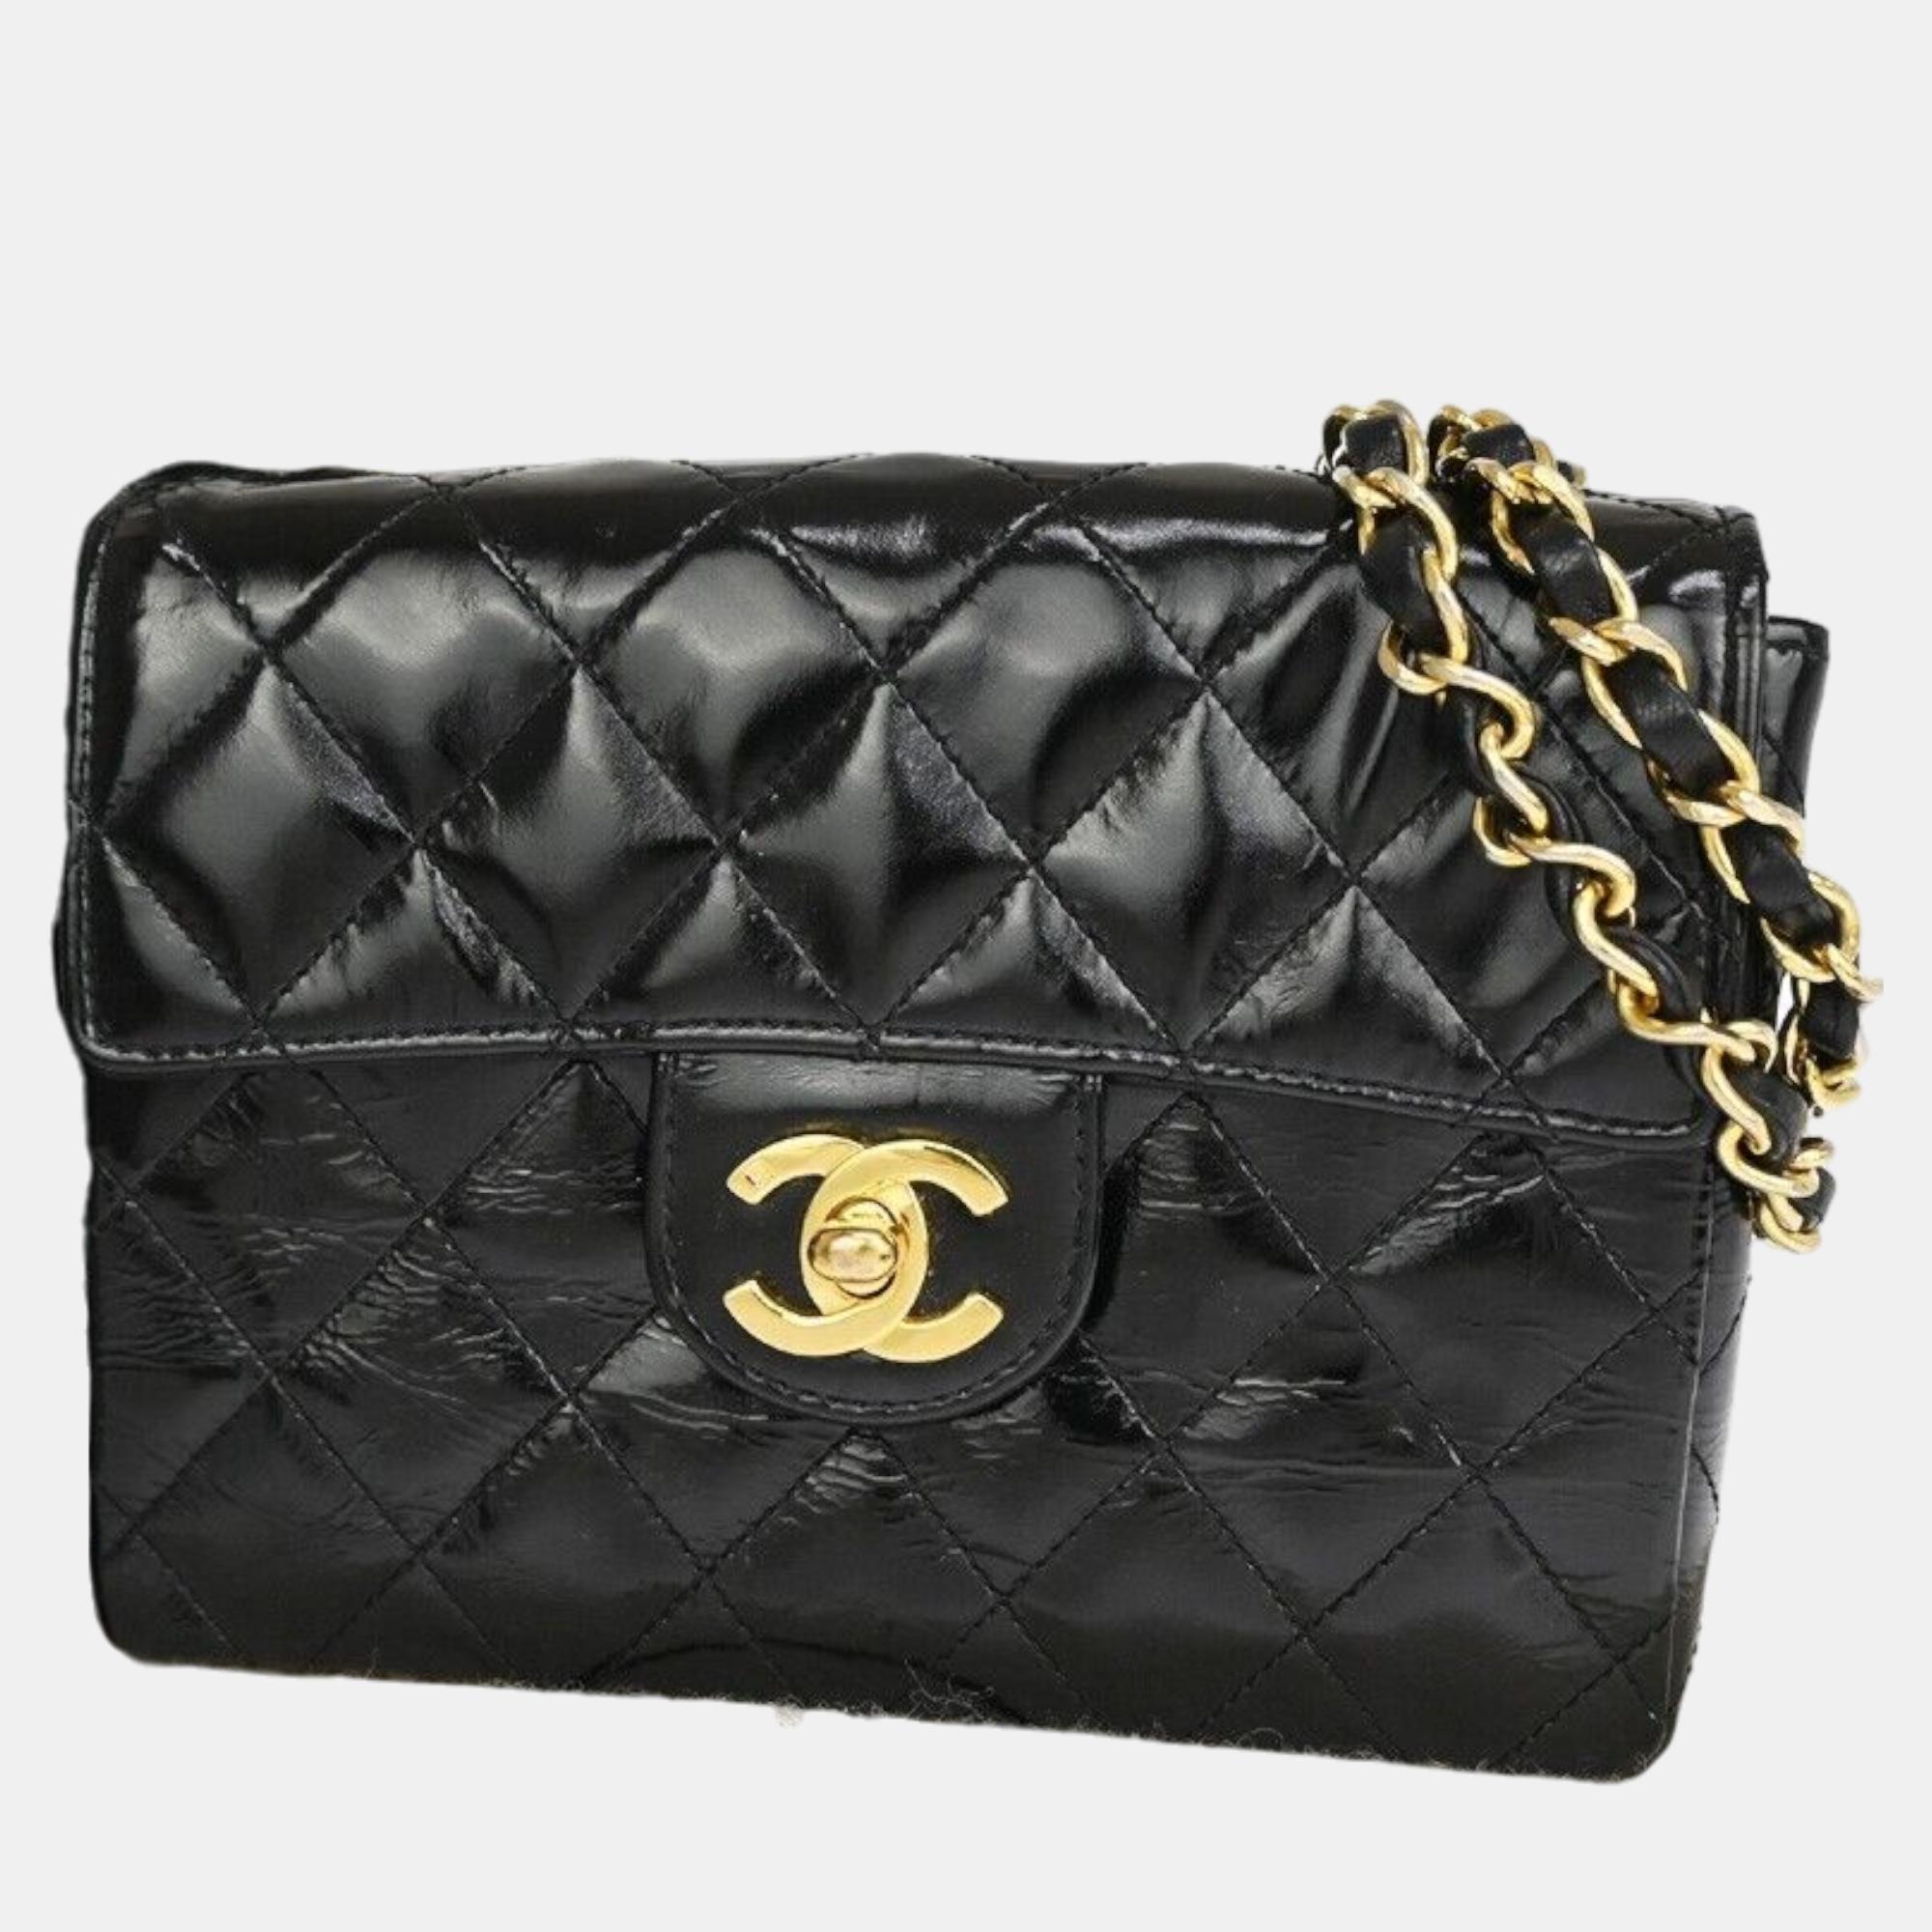 Chanel black lambskin leather mini square classic double flap shoulder bags